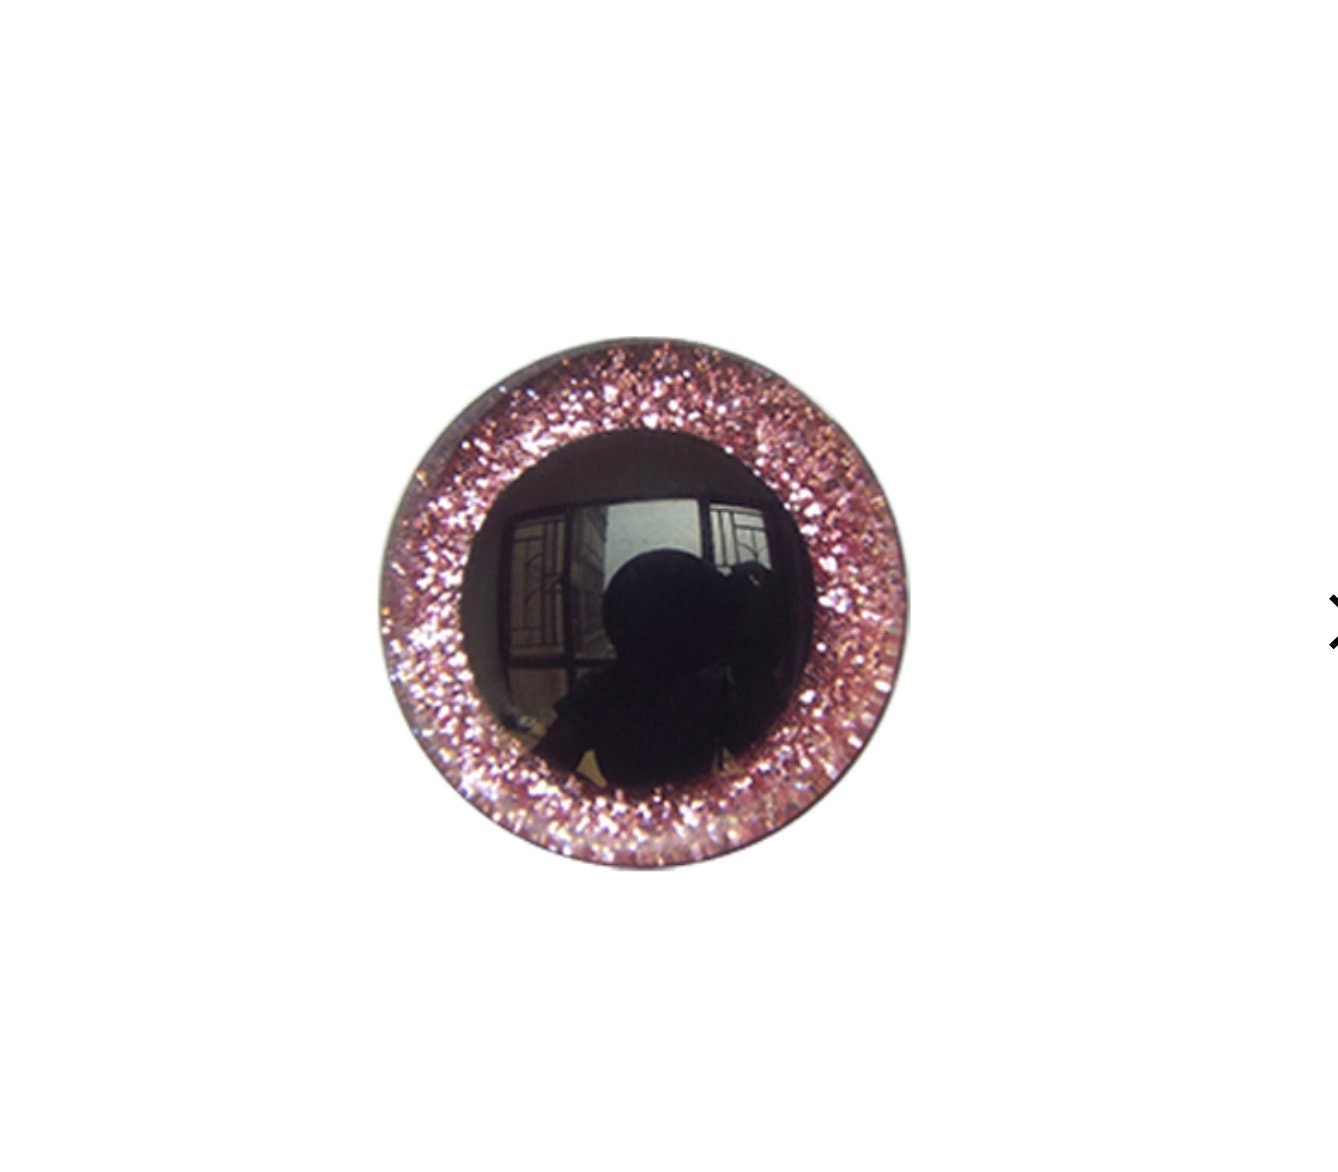 Glitter Safety Eyes (Pink & Silver) for Amigurumi – Snacksies Handicraft